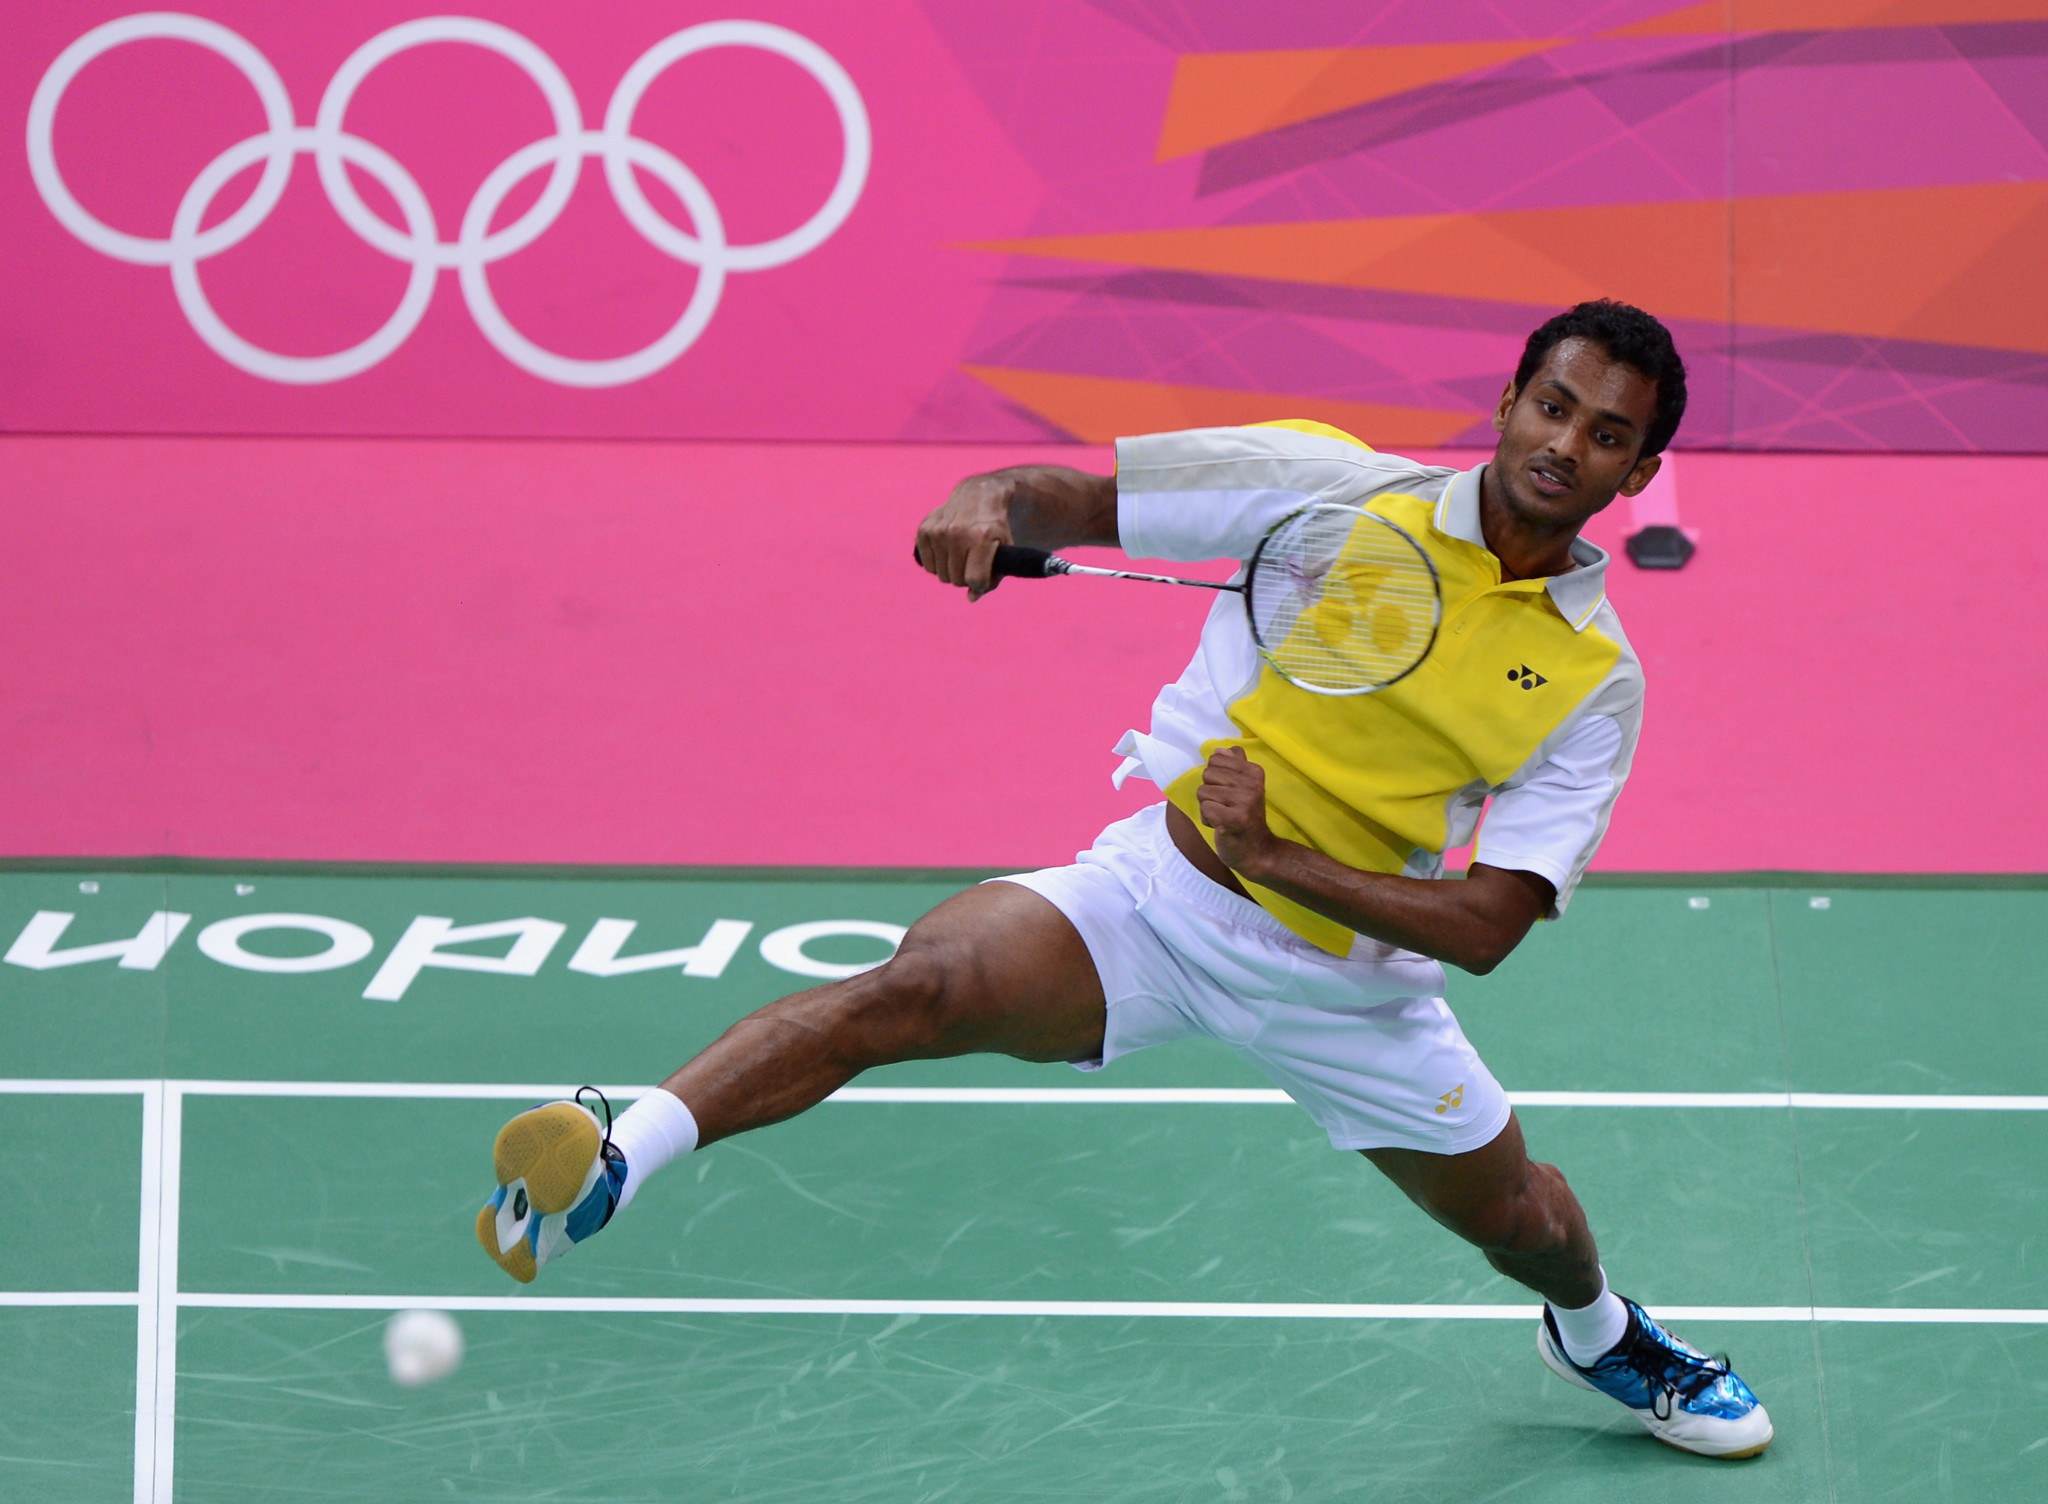 Badminton participant set for third Olympics as Sri Lanka confirms Tokyo 2020 workforce